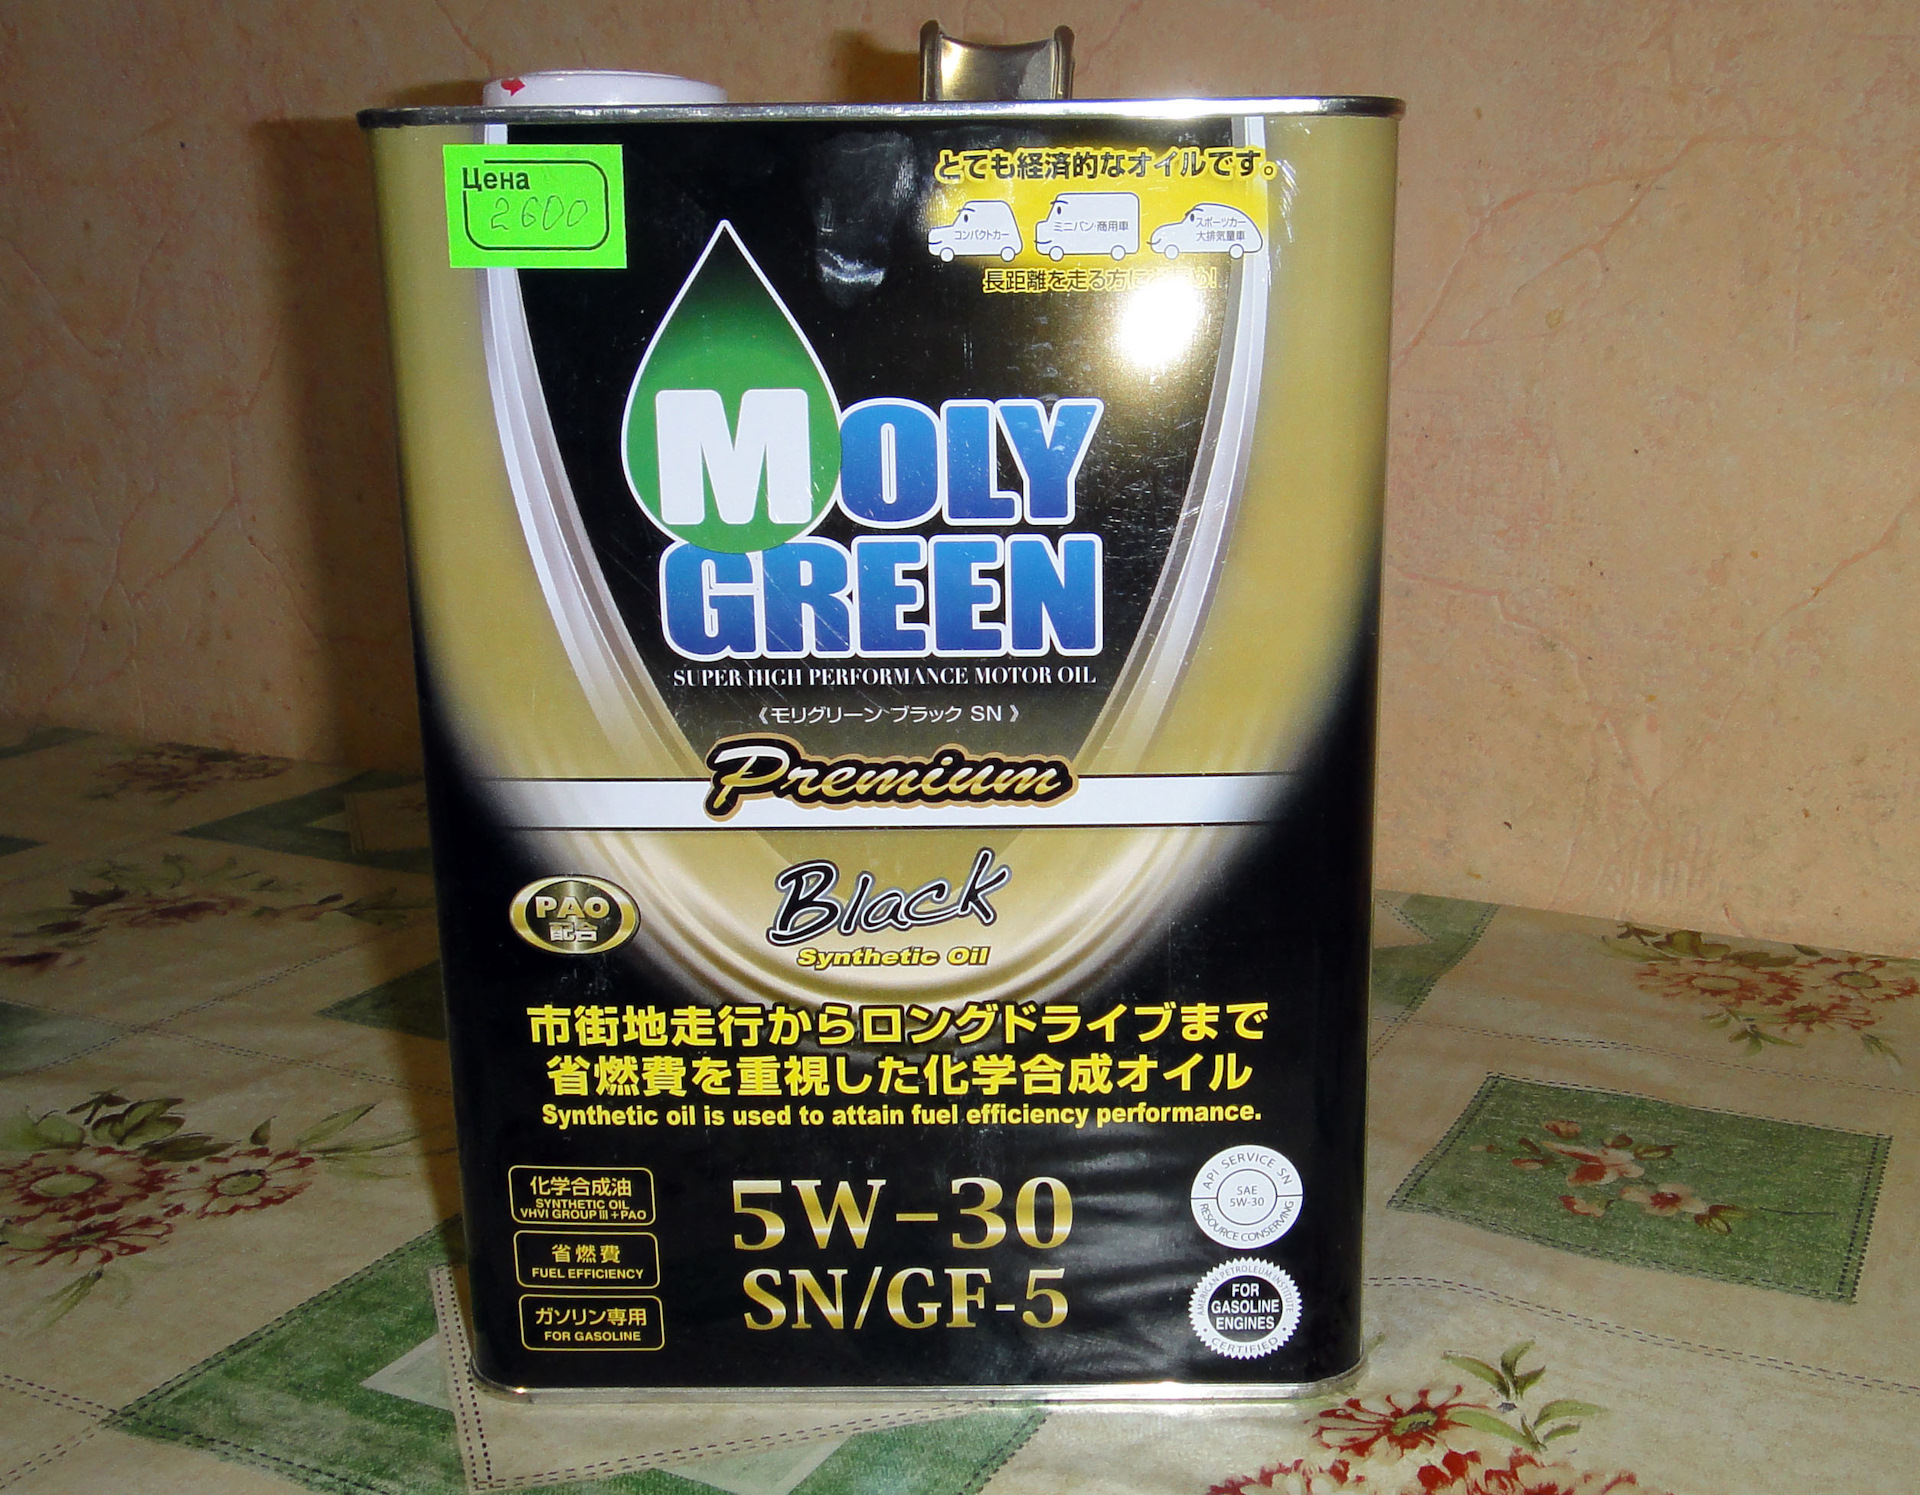 Моли грин 5w30 купить. Моторное масло Moly Green 5w30. Моли Грин премиум 5w30. Moly Green 5w30 Premium Black. Масло моли Грин 5w30 синтетика.